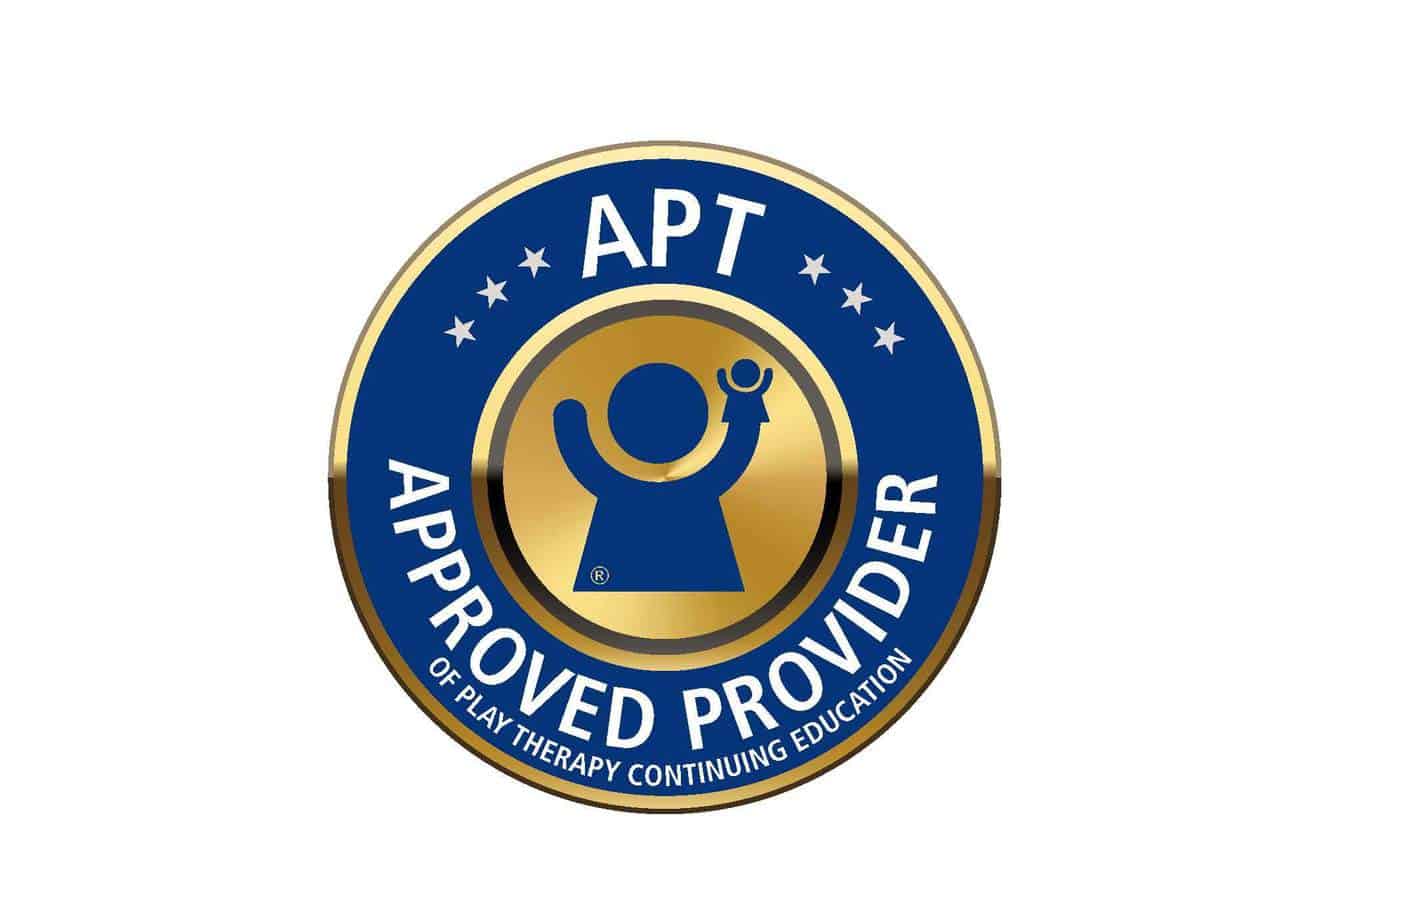 APT Approved Provider Logo